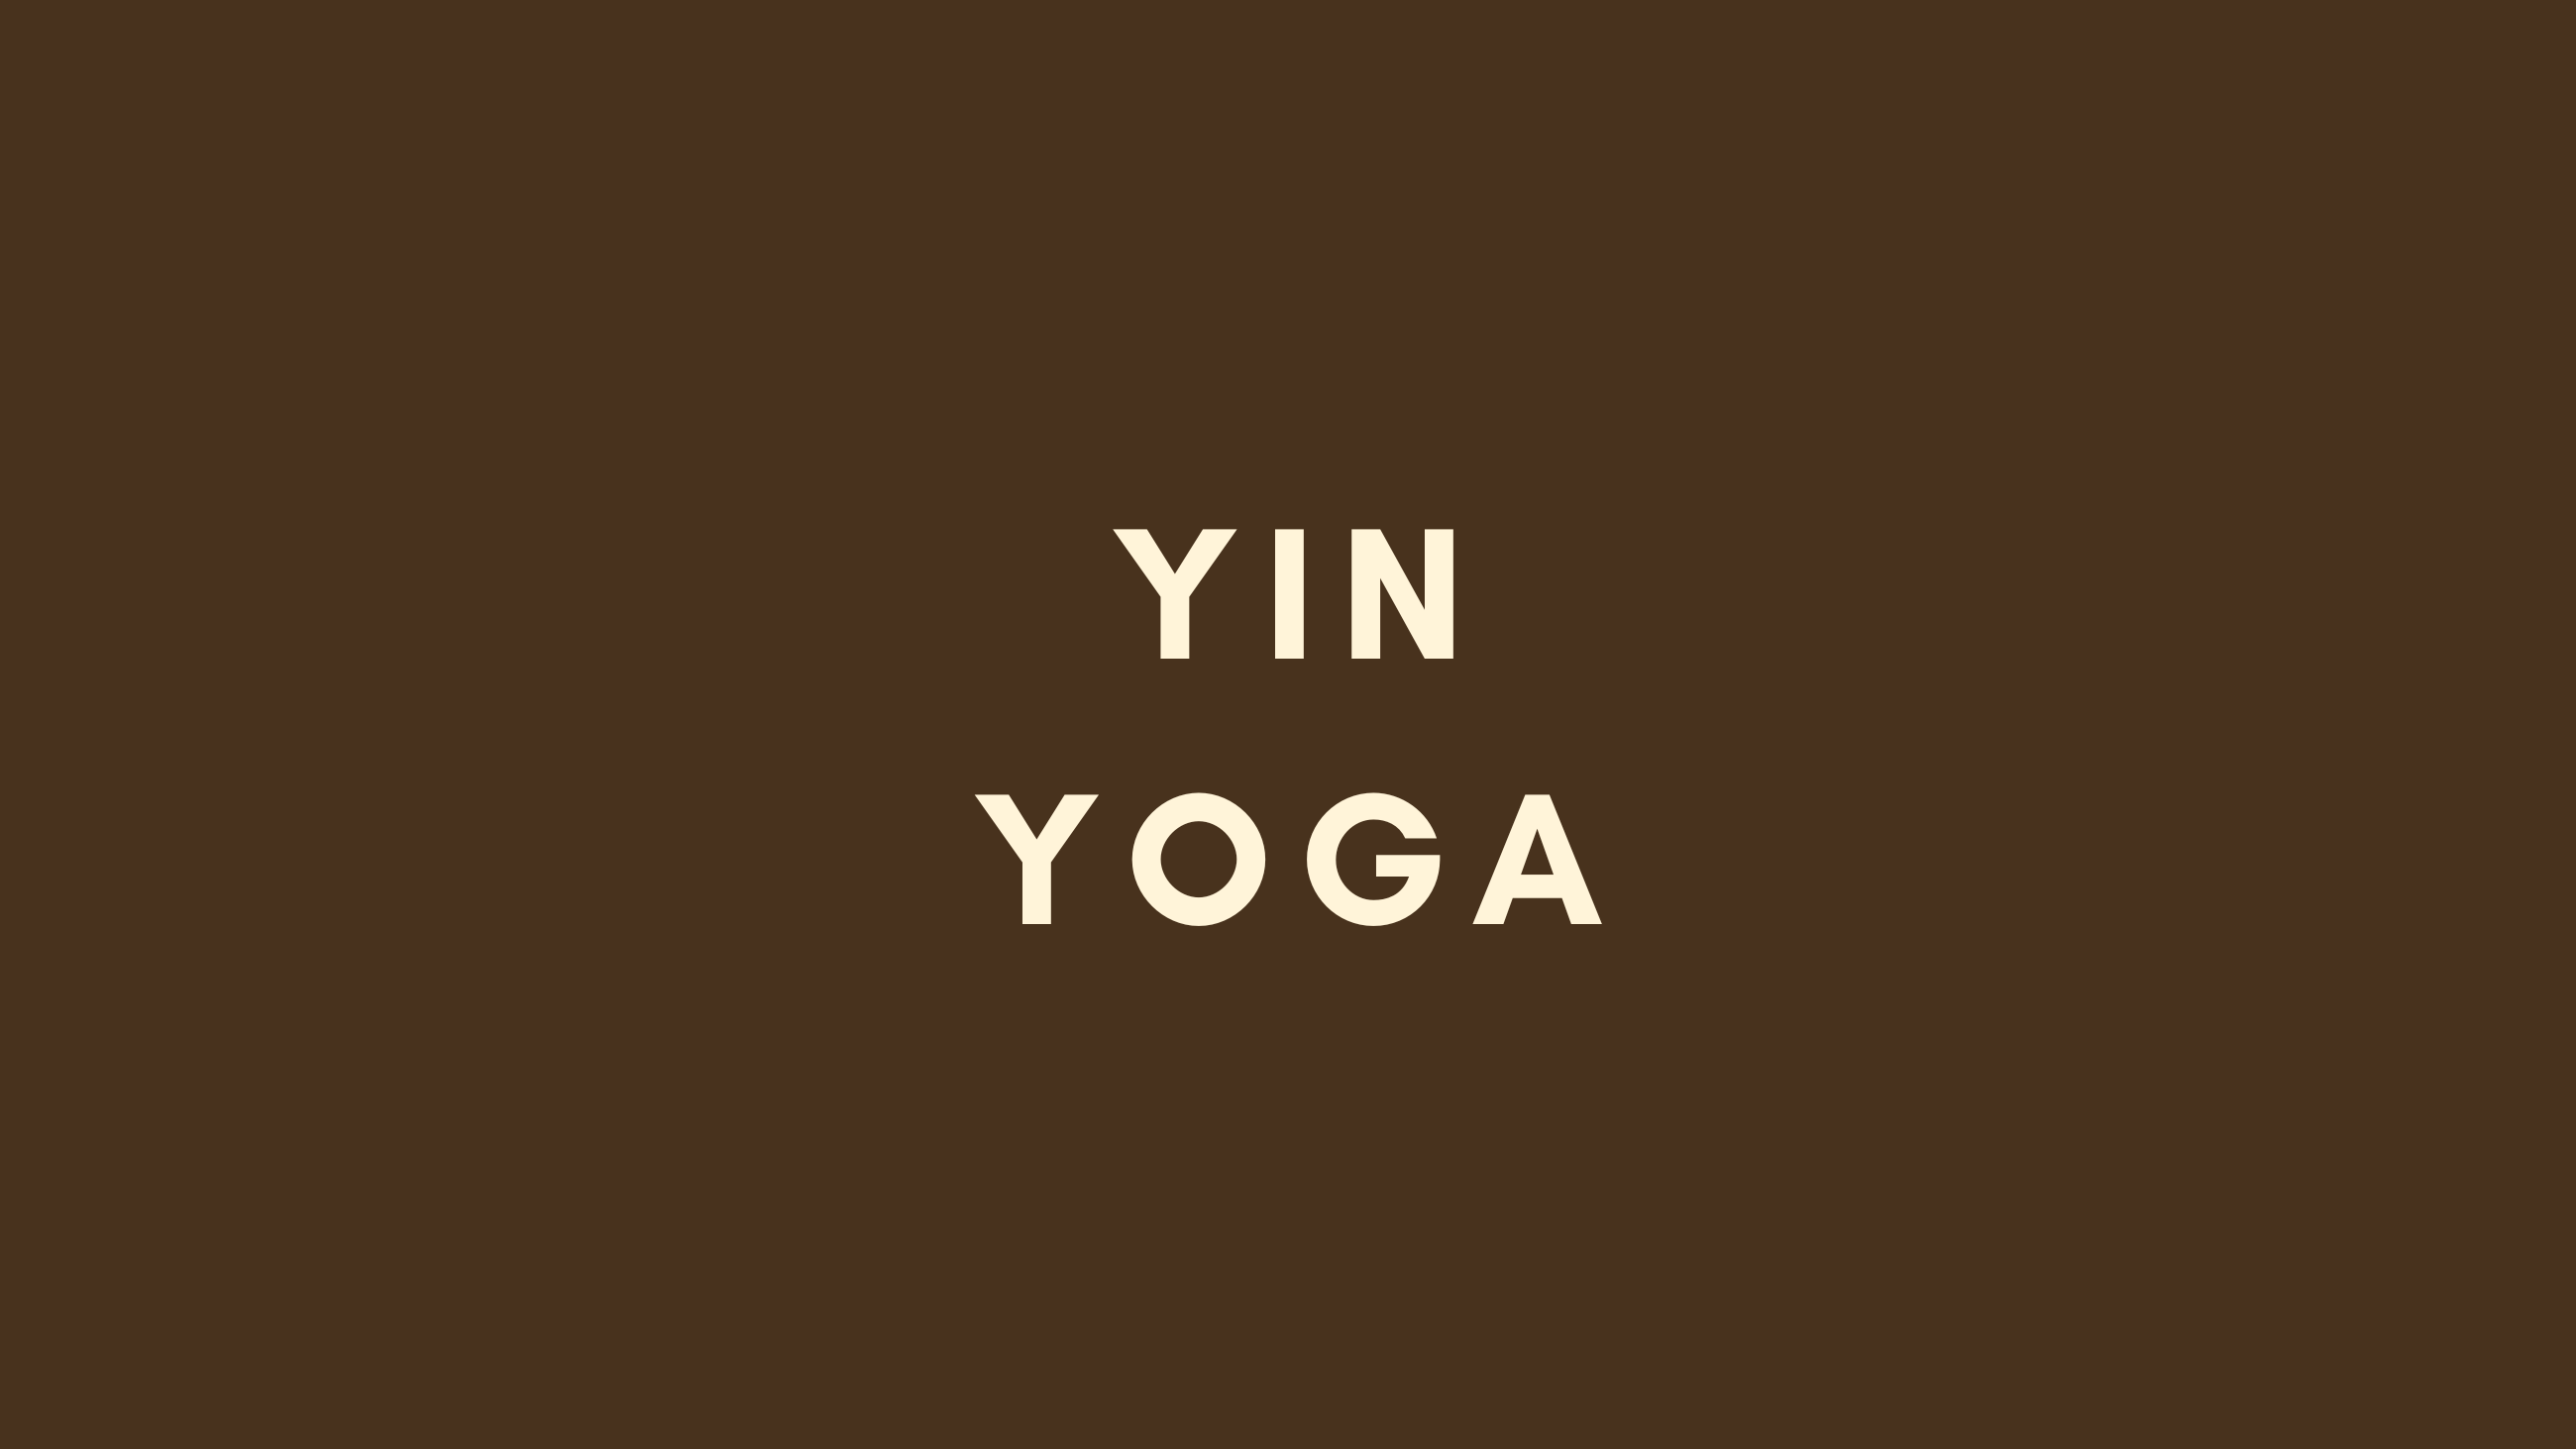 Yin Yoga stress body mind balance kropsterapi healing